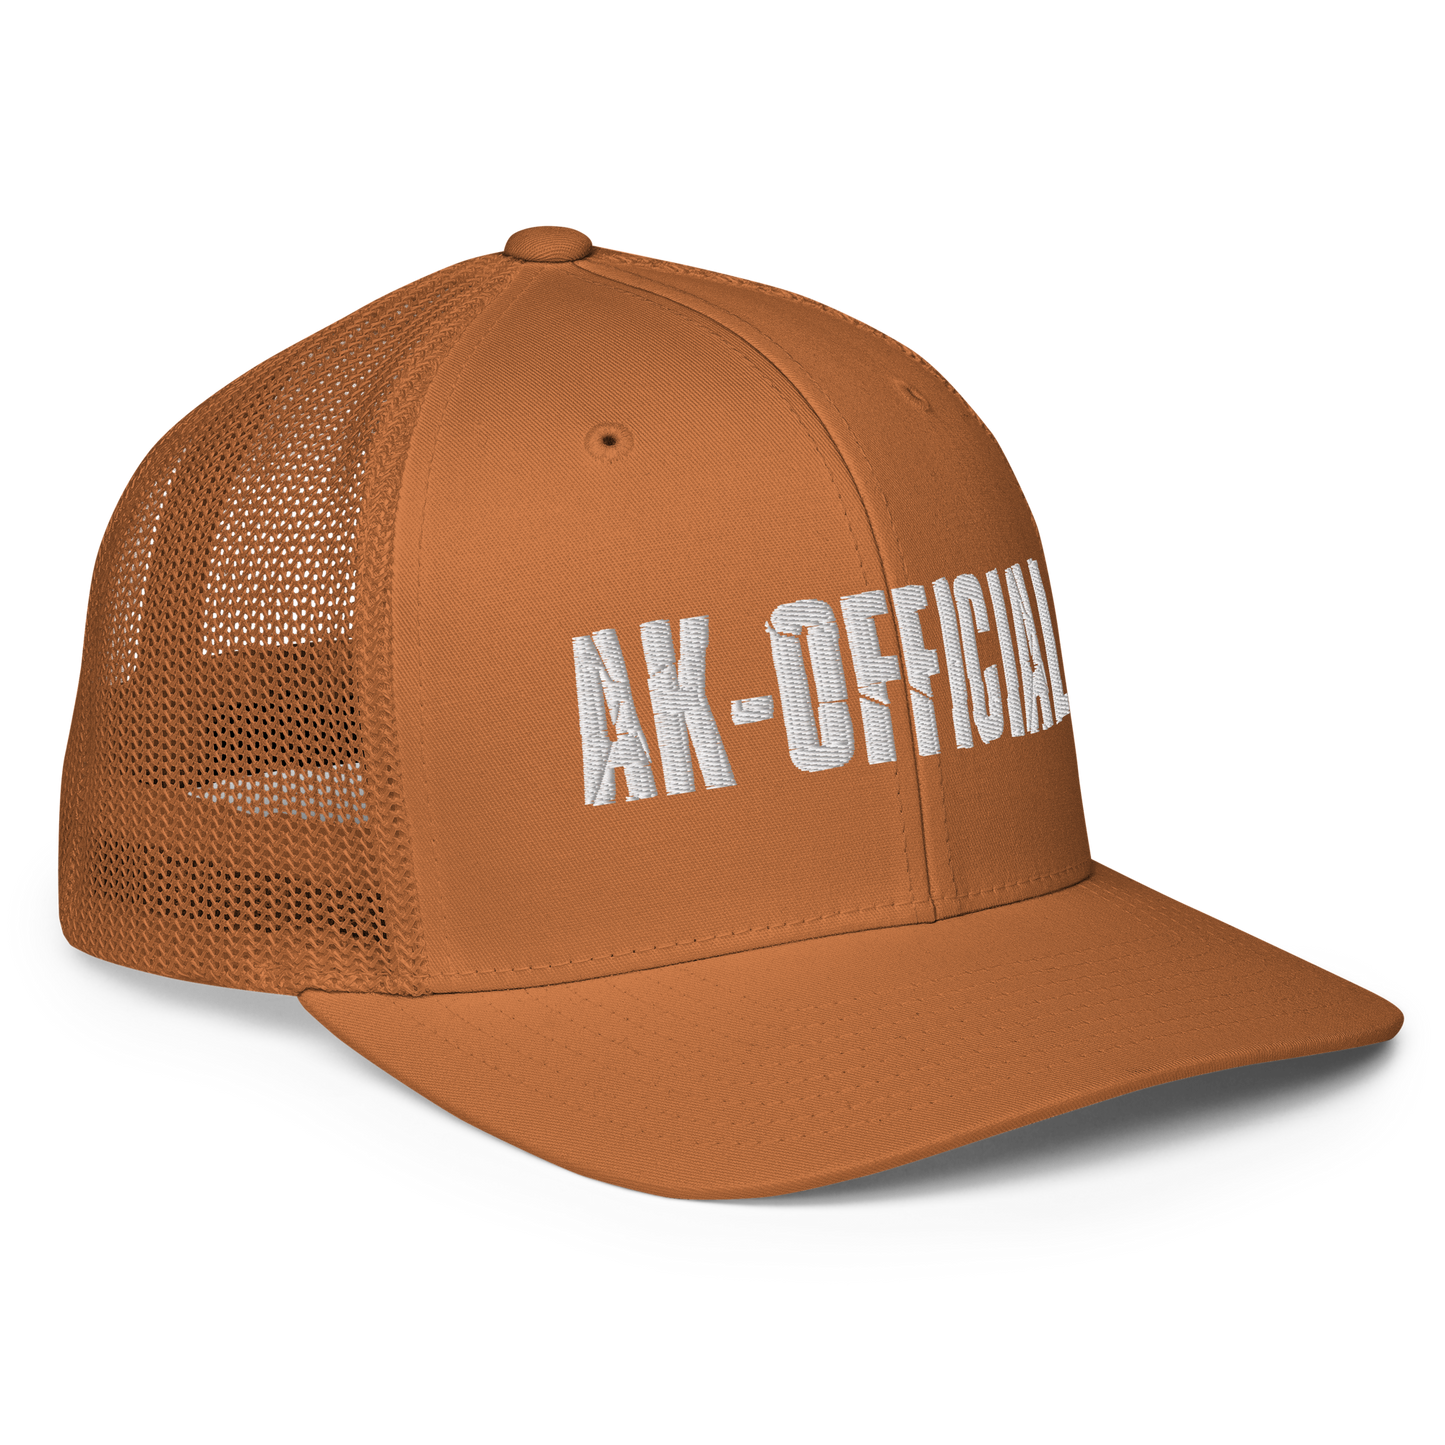 AK-Xplosion, Trucker-Cap Flexfit